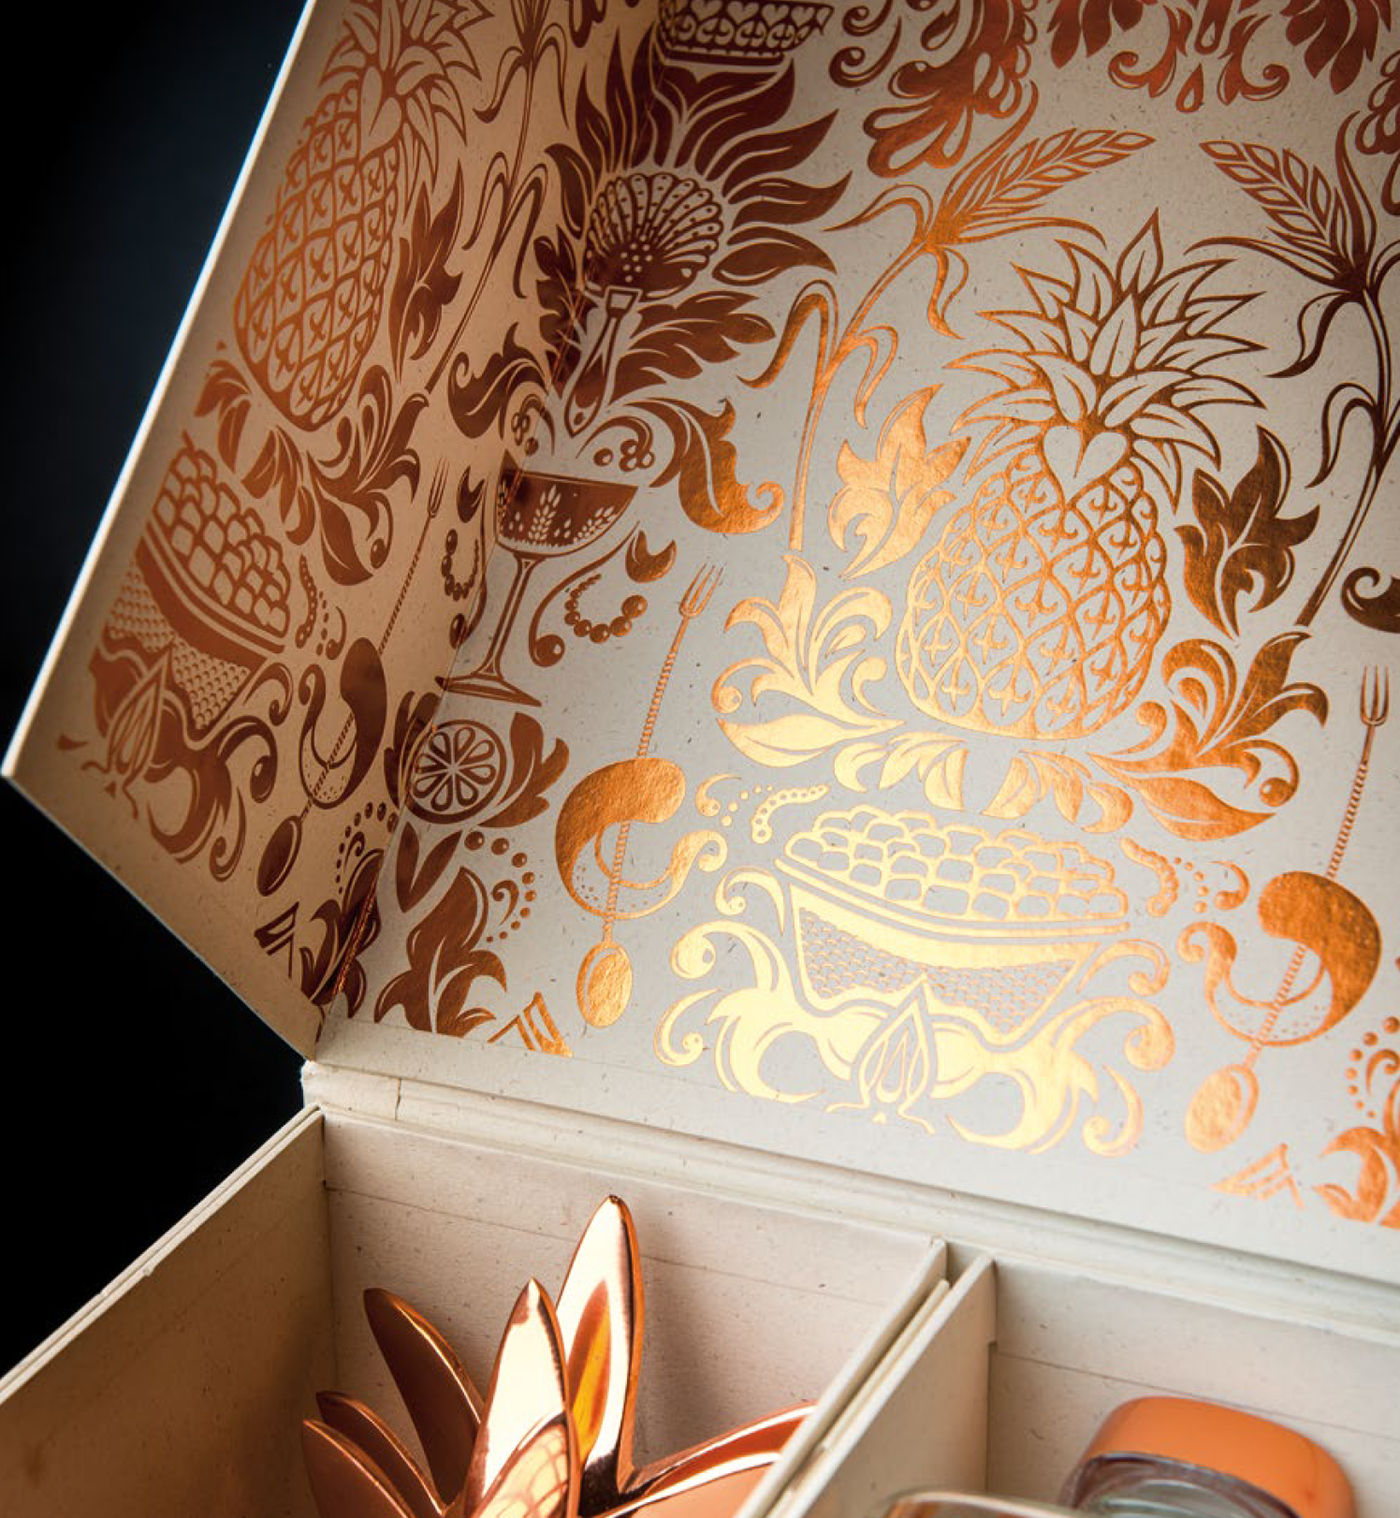 copper Pineapple absolut ELYX bottle foil box Booklet Vodka handcrafted pattern wallpaper